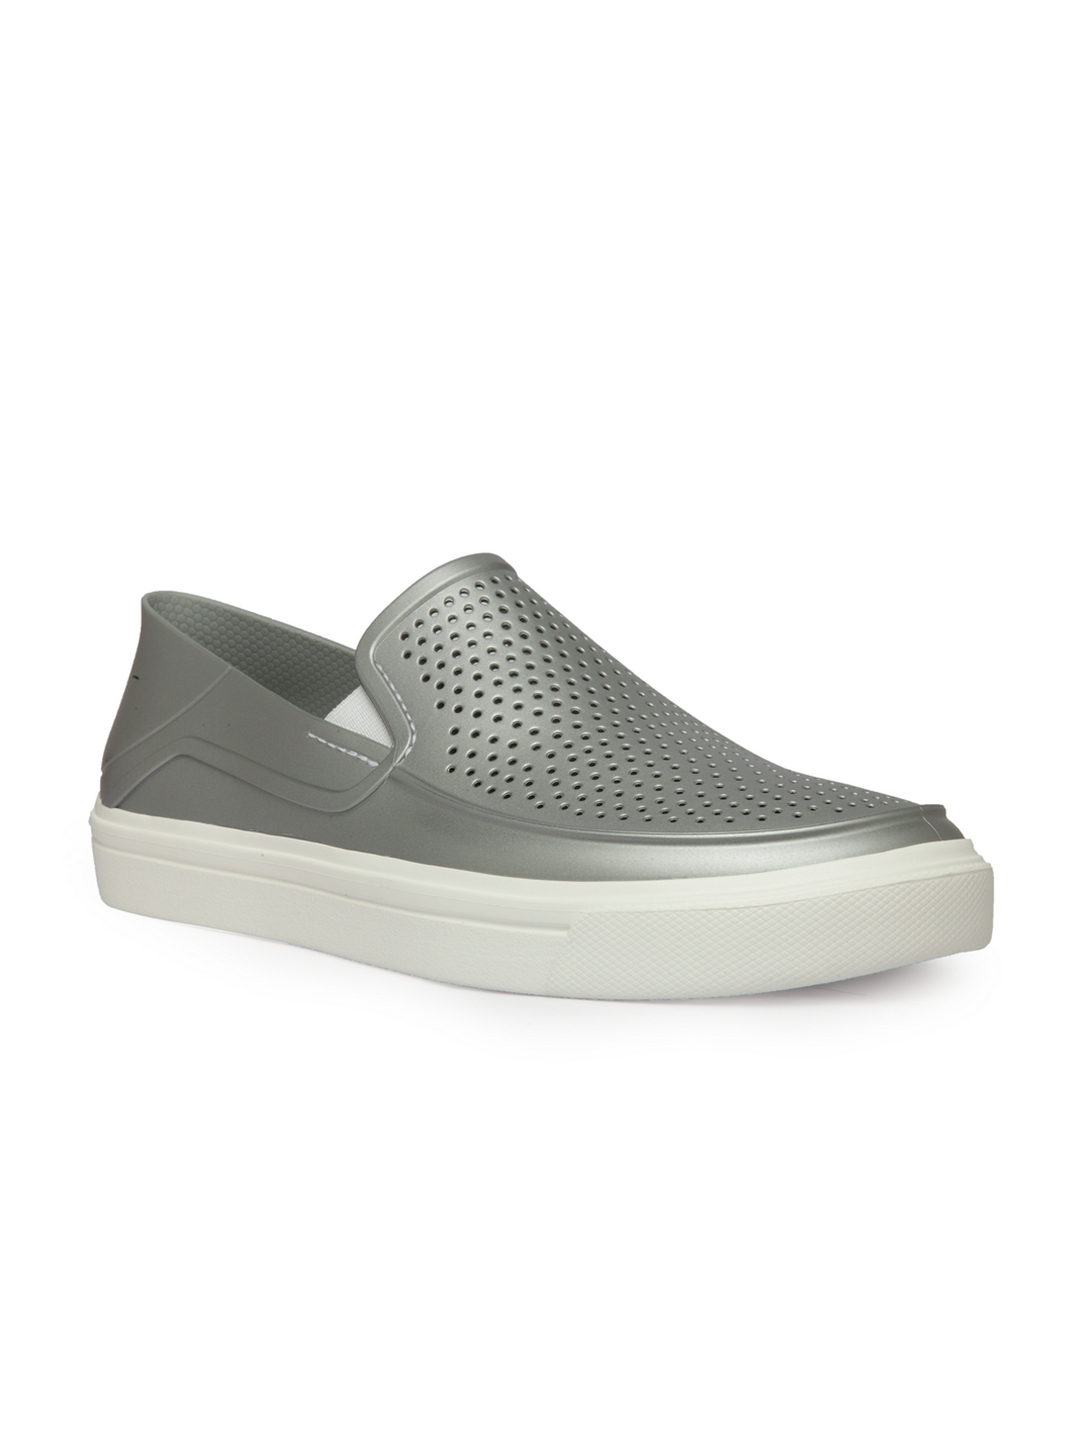 Buy Crocs Women Grey Slip On Sneakers 